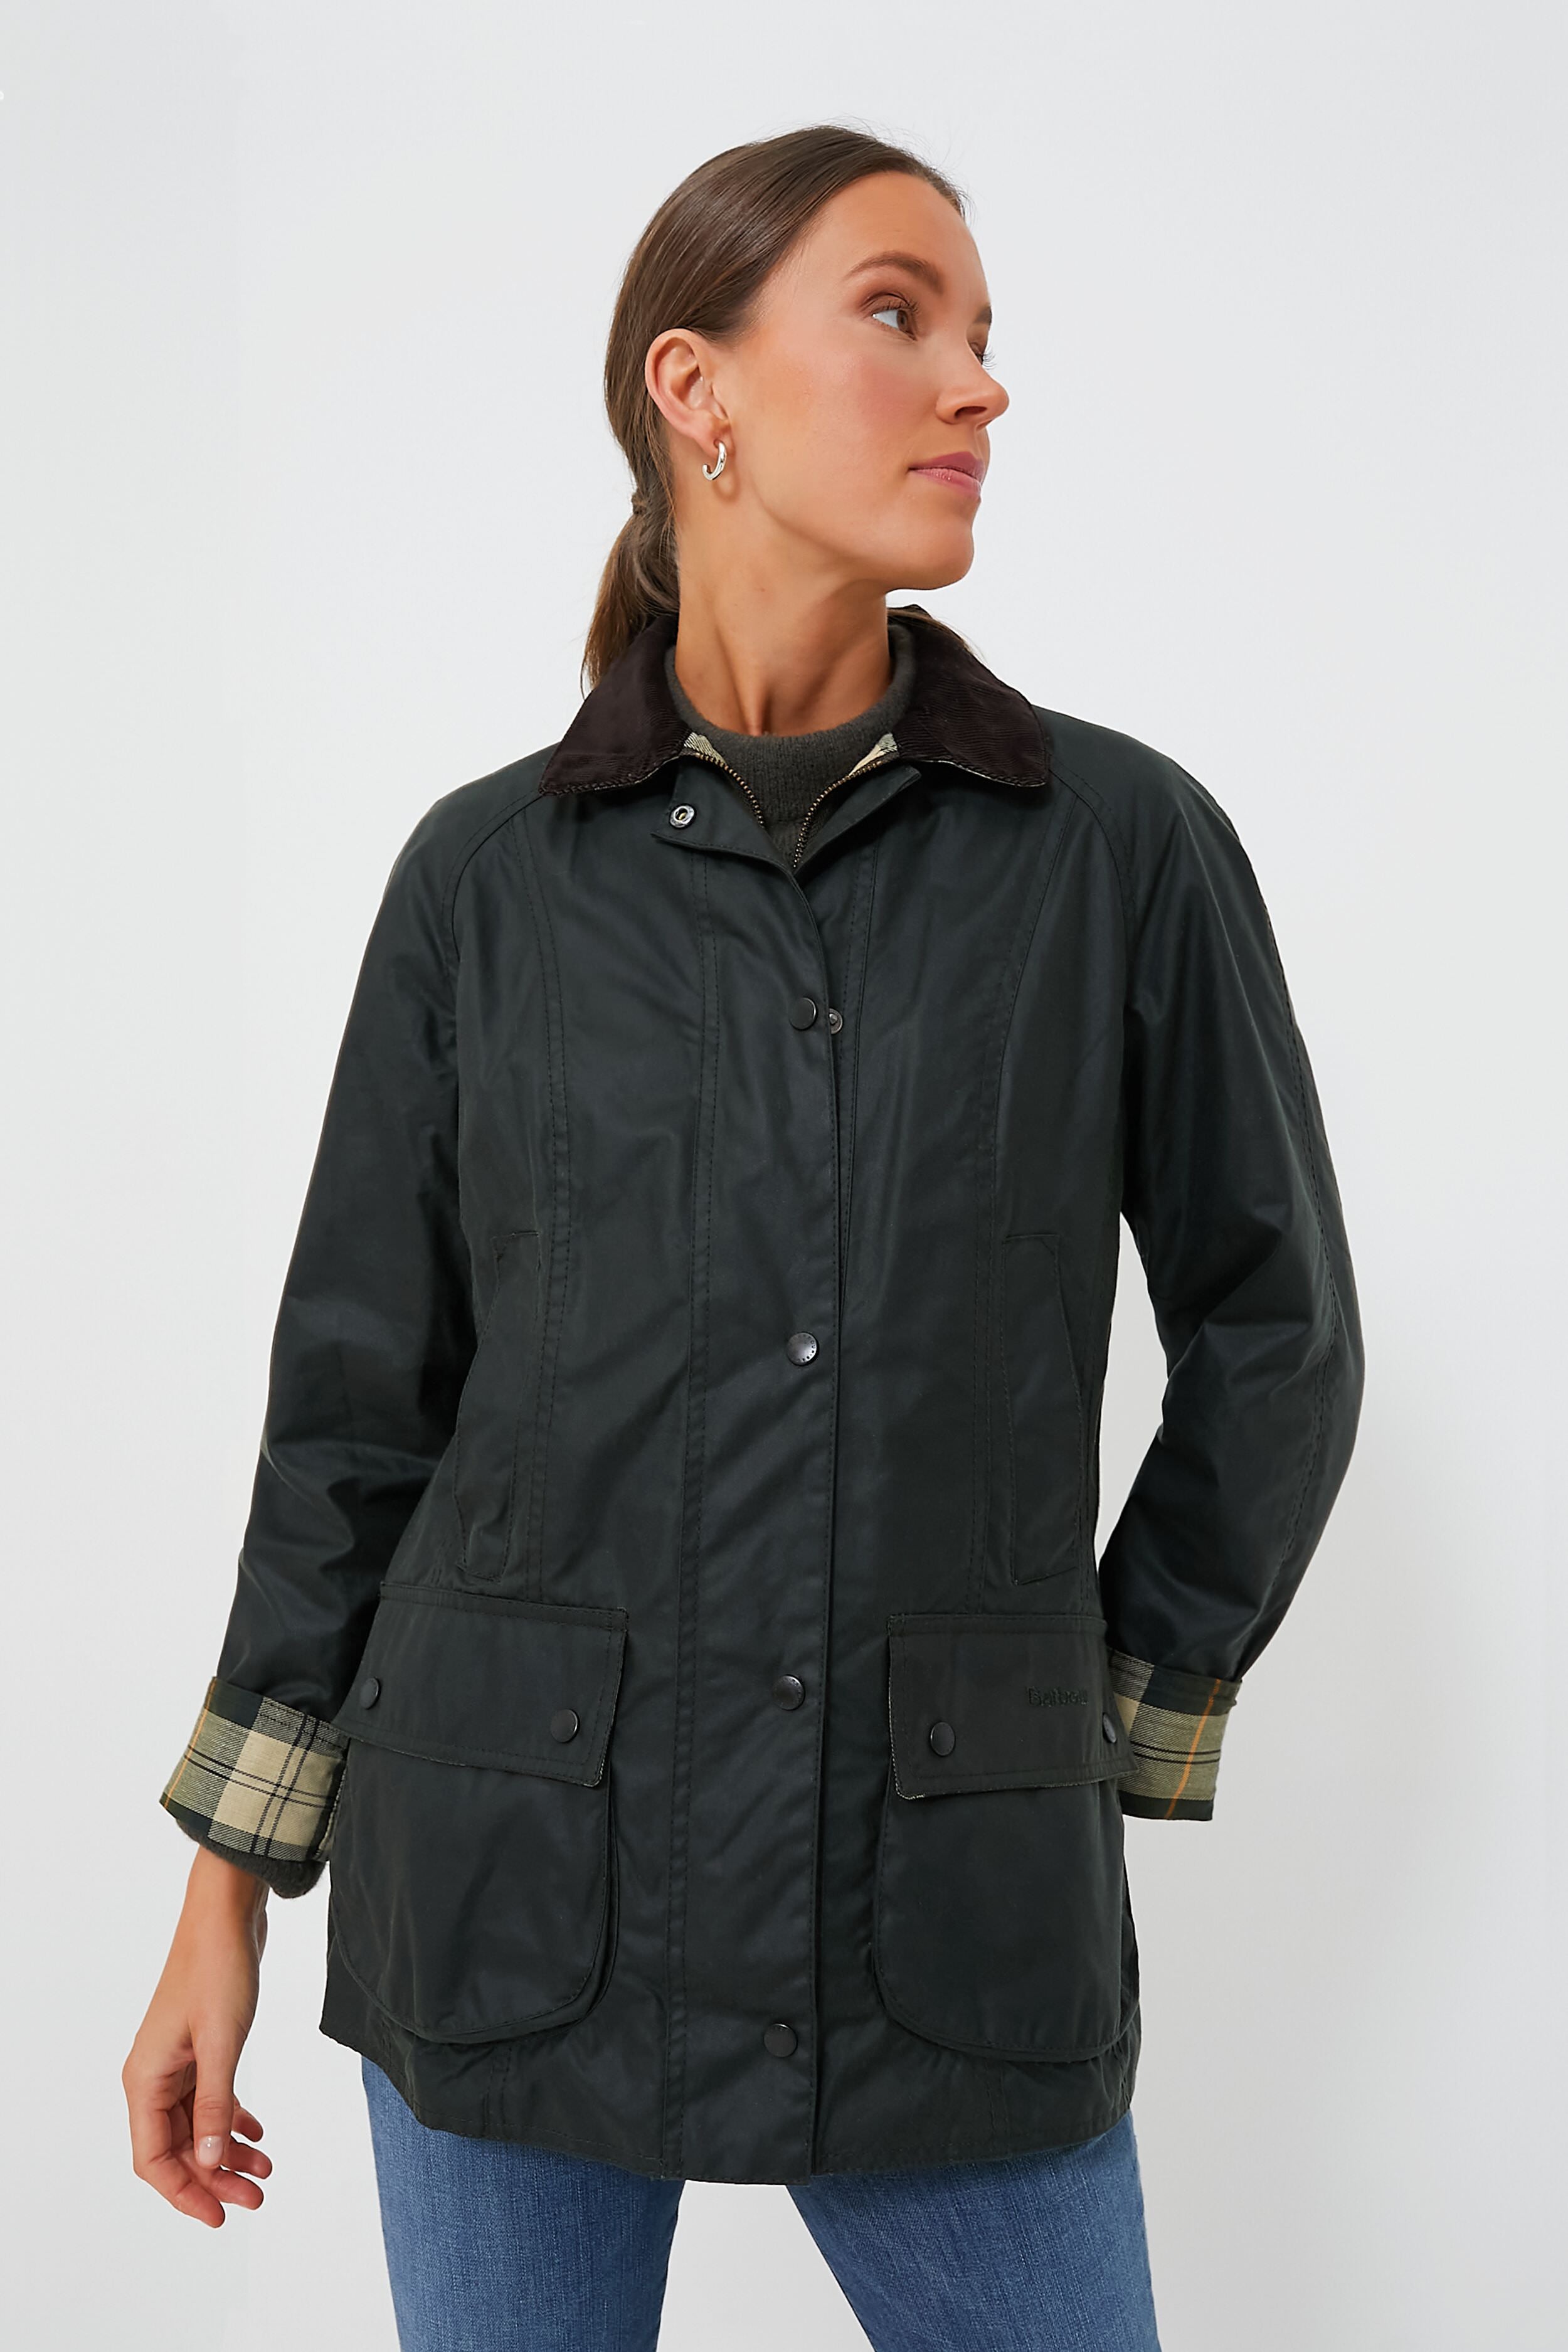 Monogram Mink Three-Quarter Sleeves Jacket - Women - Ready-to-Wear